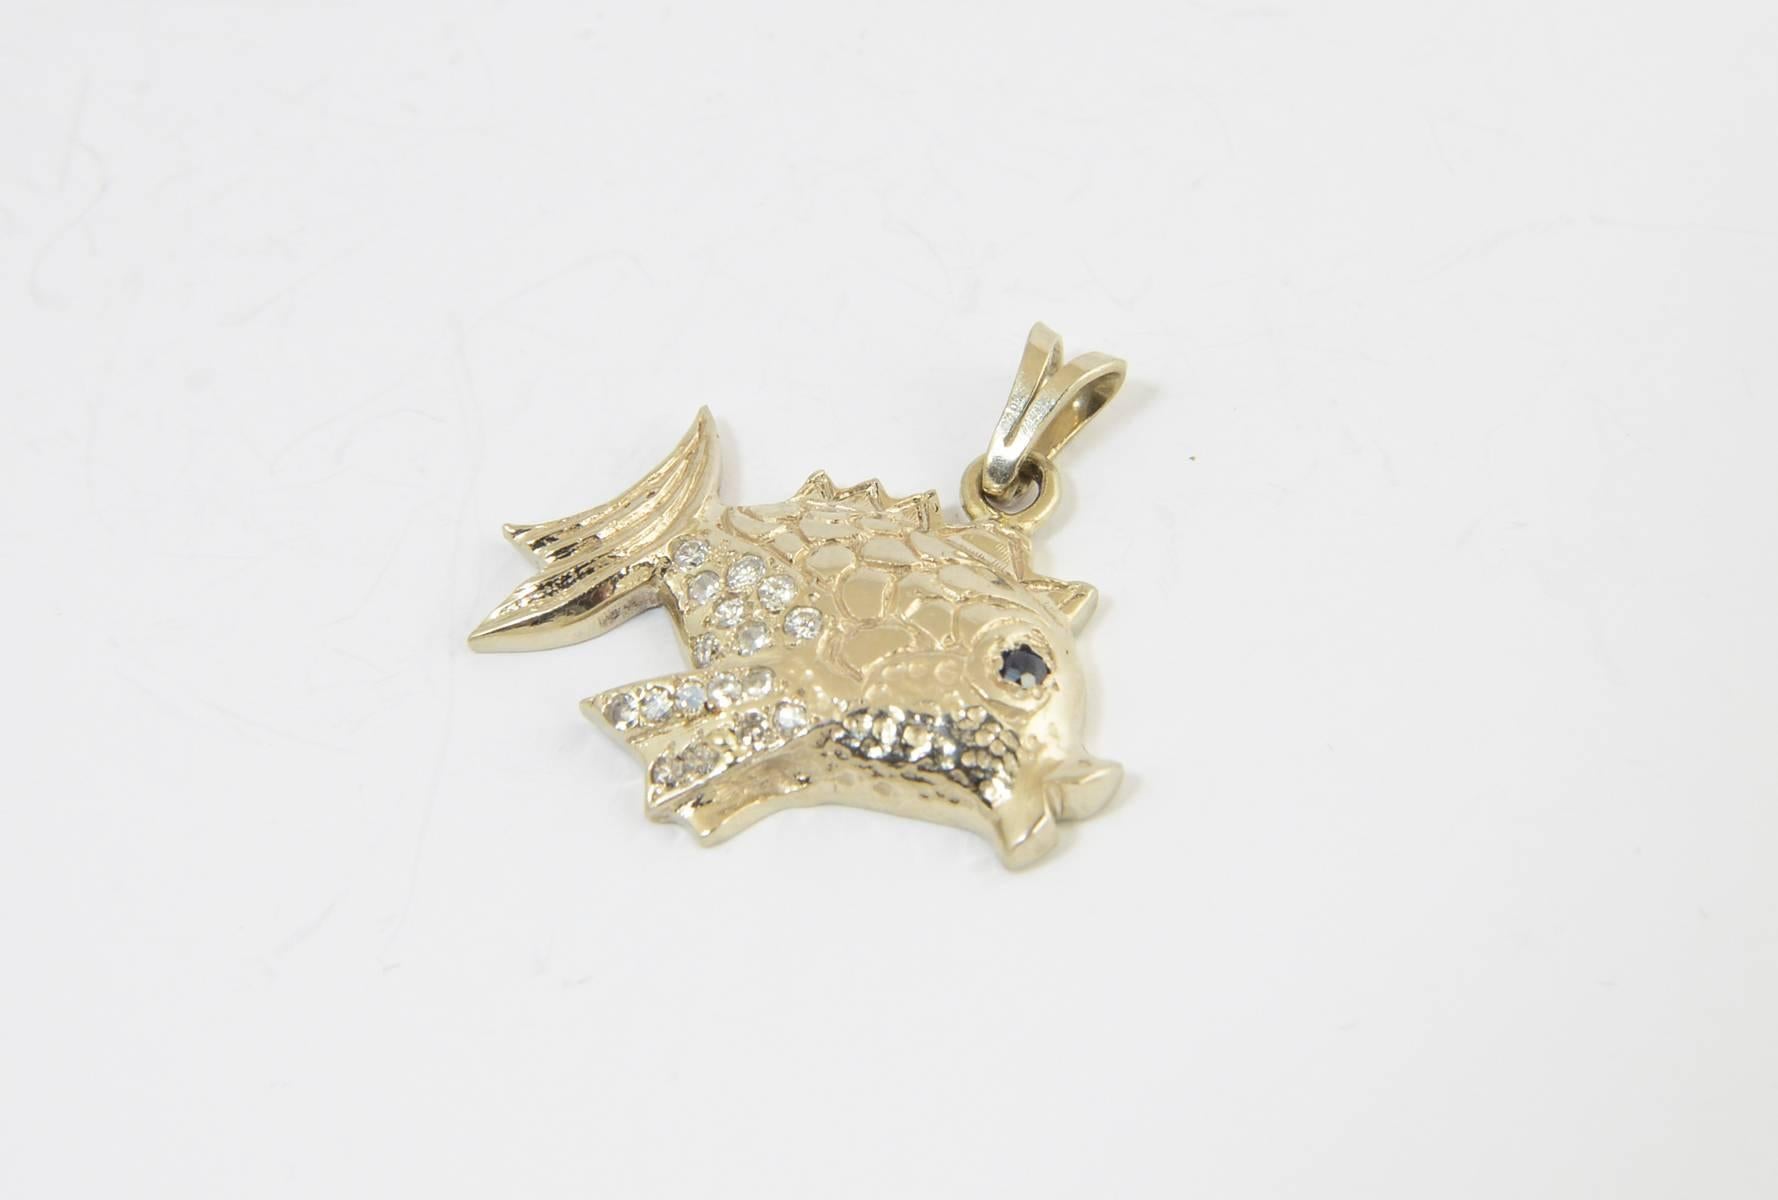 Pavé diamond fish pendant/charm made of 14K yellow gold.